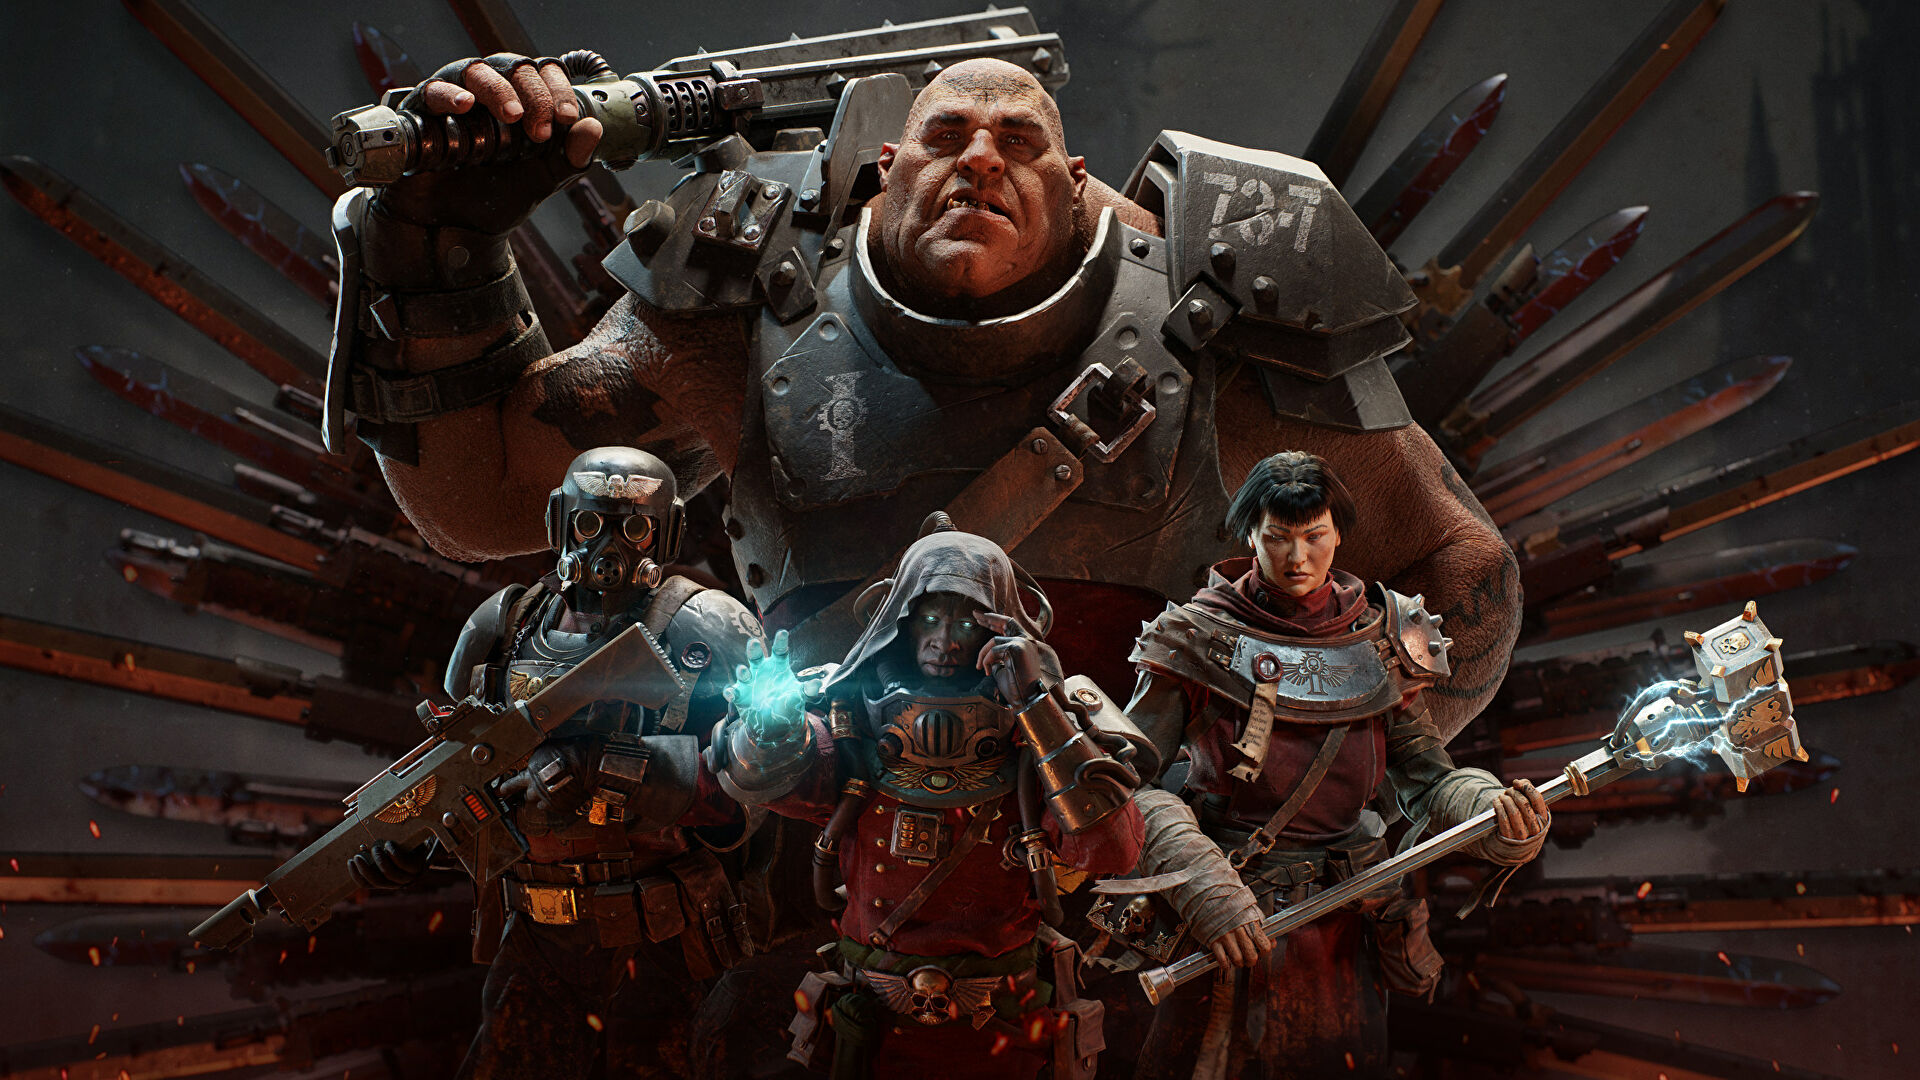 New Warhammer 40,000: Darktide gameplay shows the explosive Psyker class in action